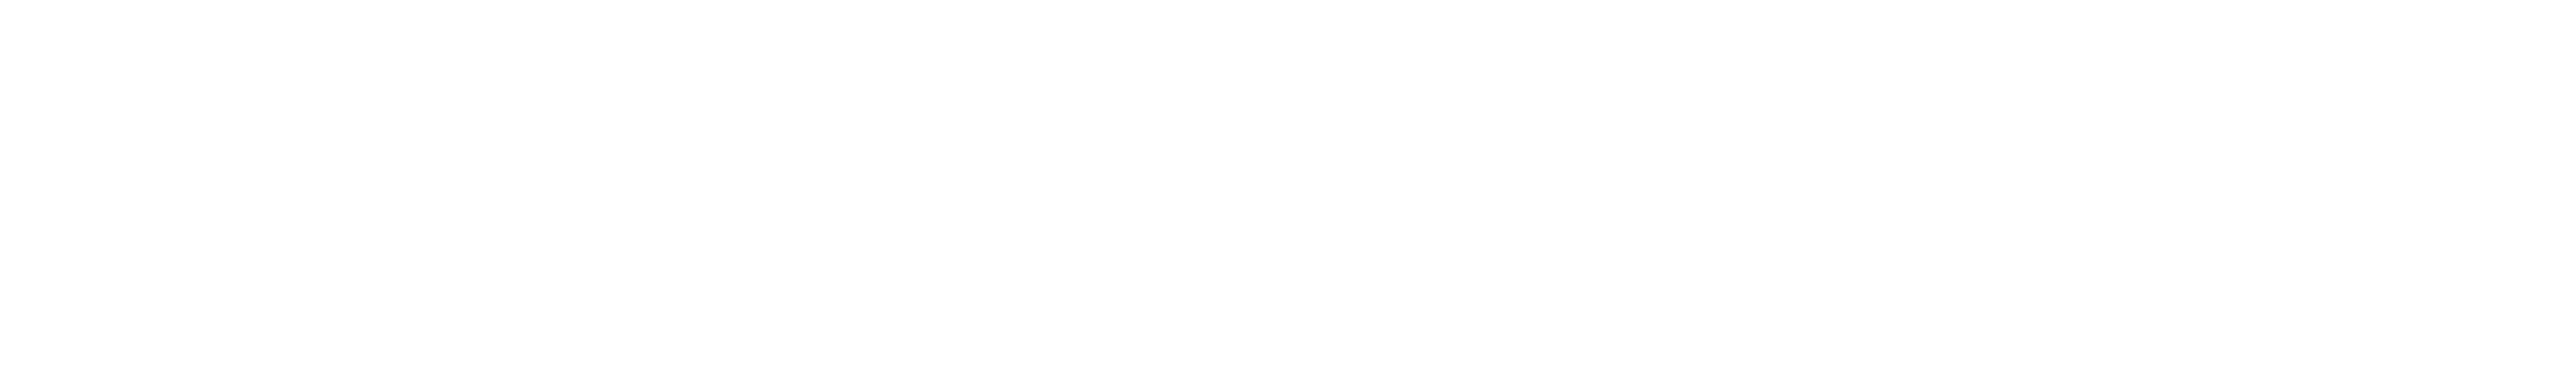 CouriersX logo